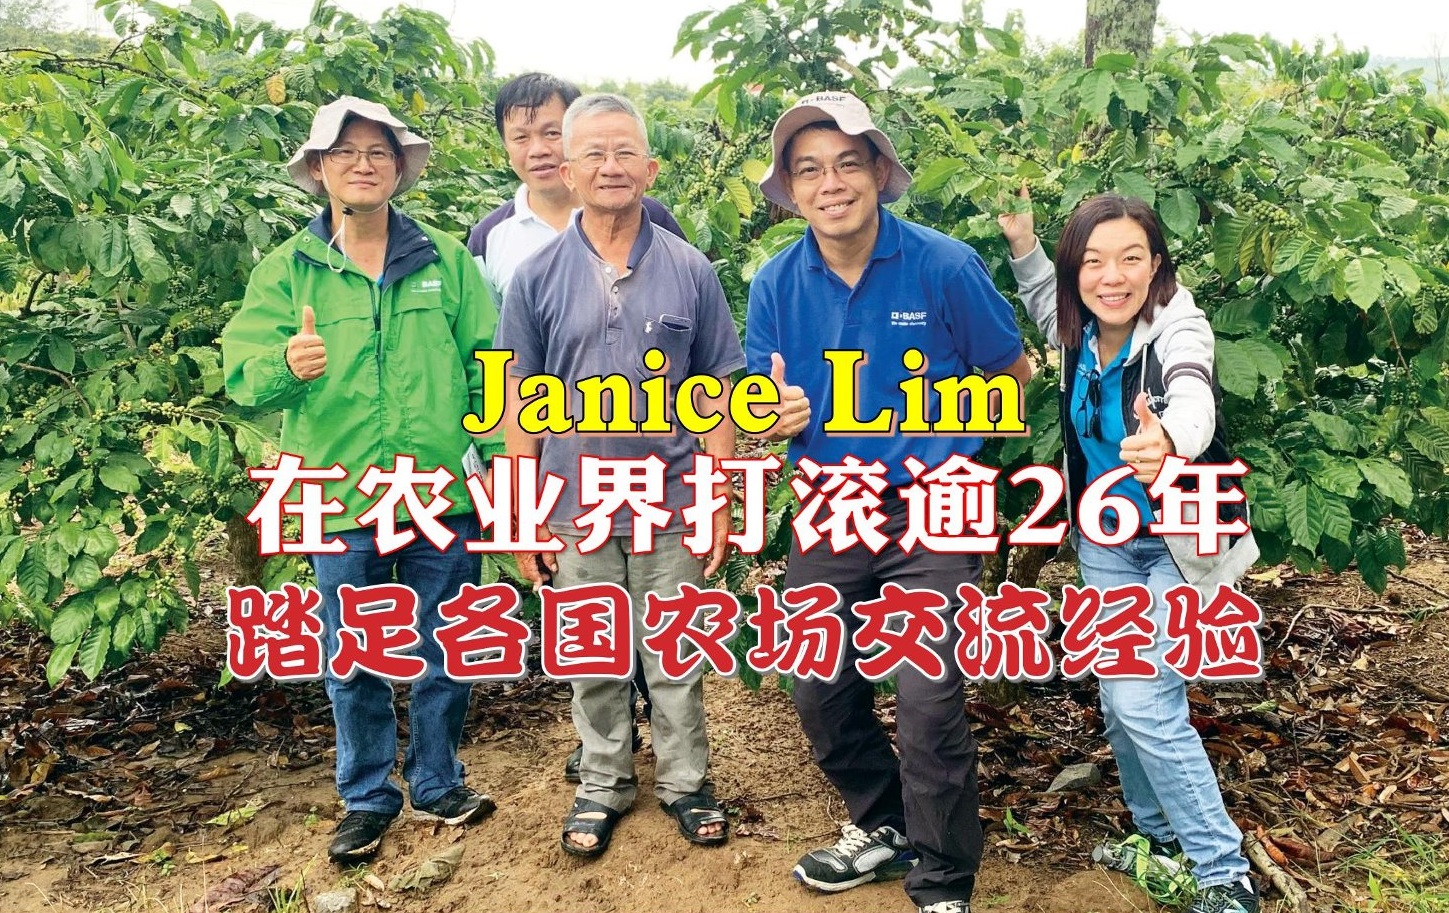 Janice Lim 加入农业近30年 踏足各国农场交流经验 - 农牧世界